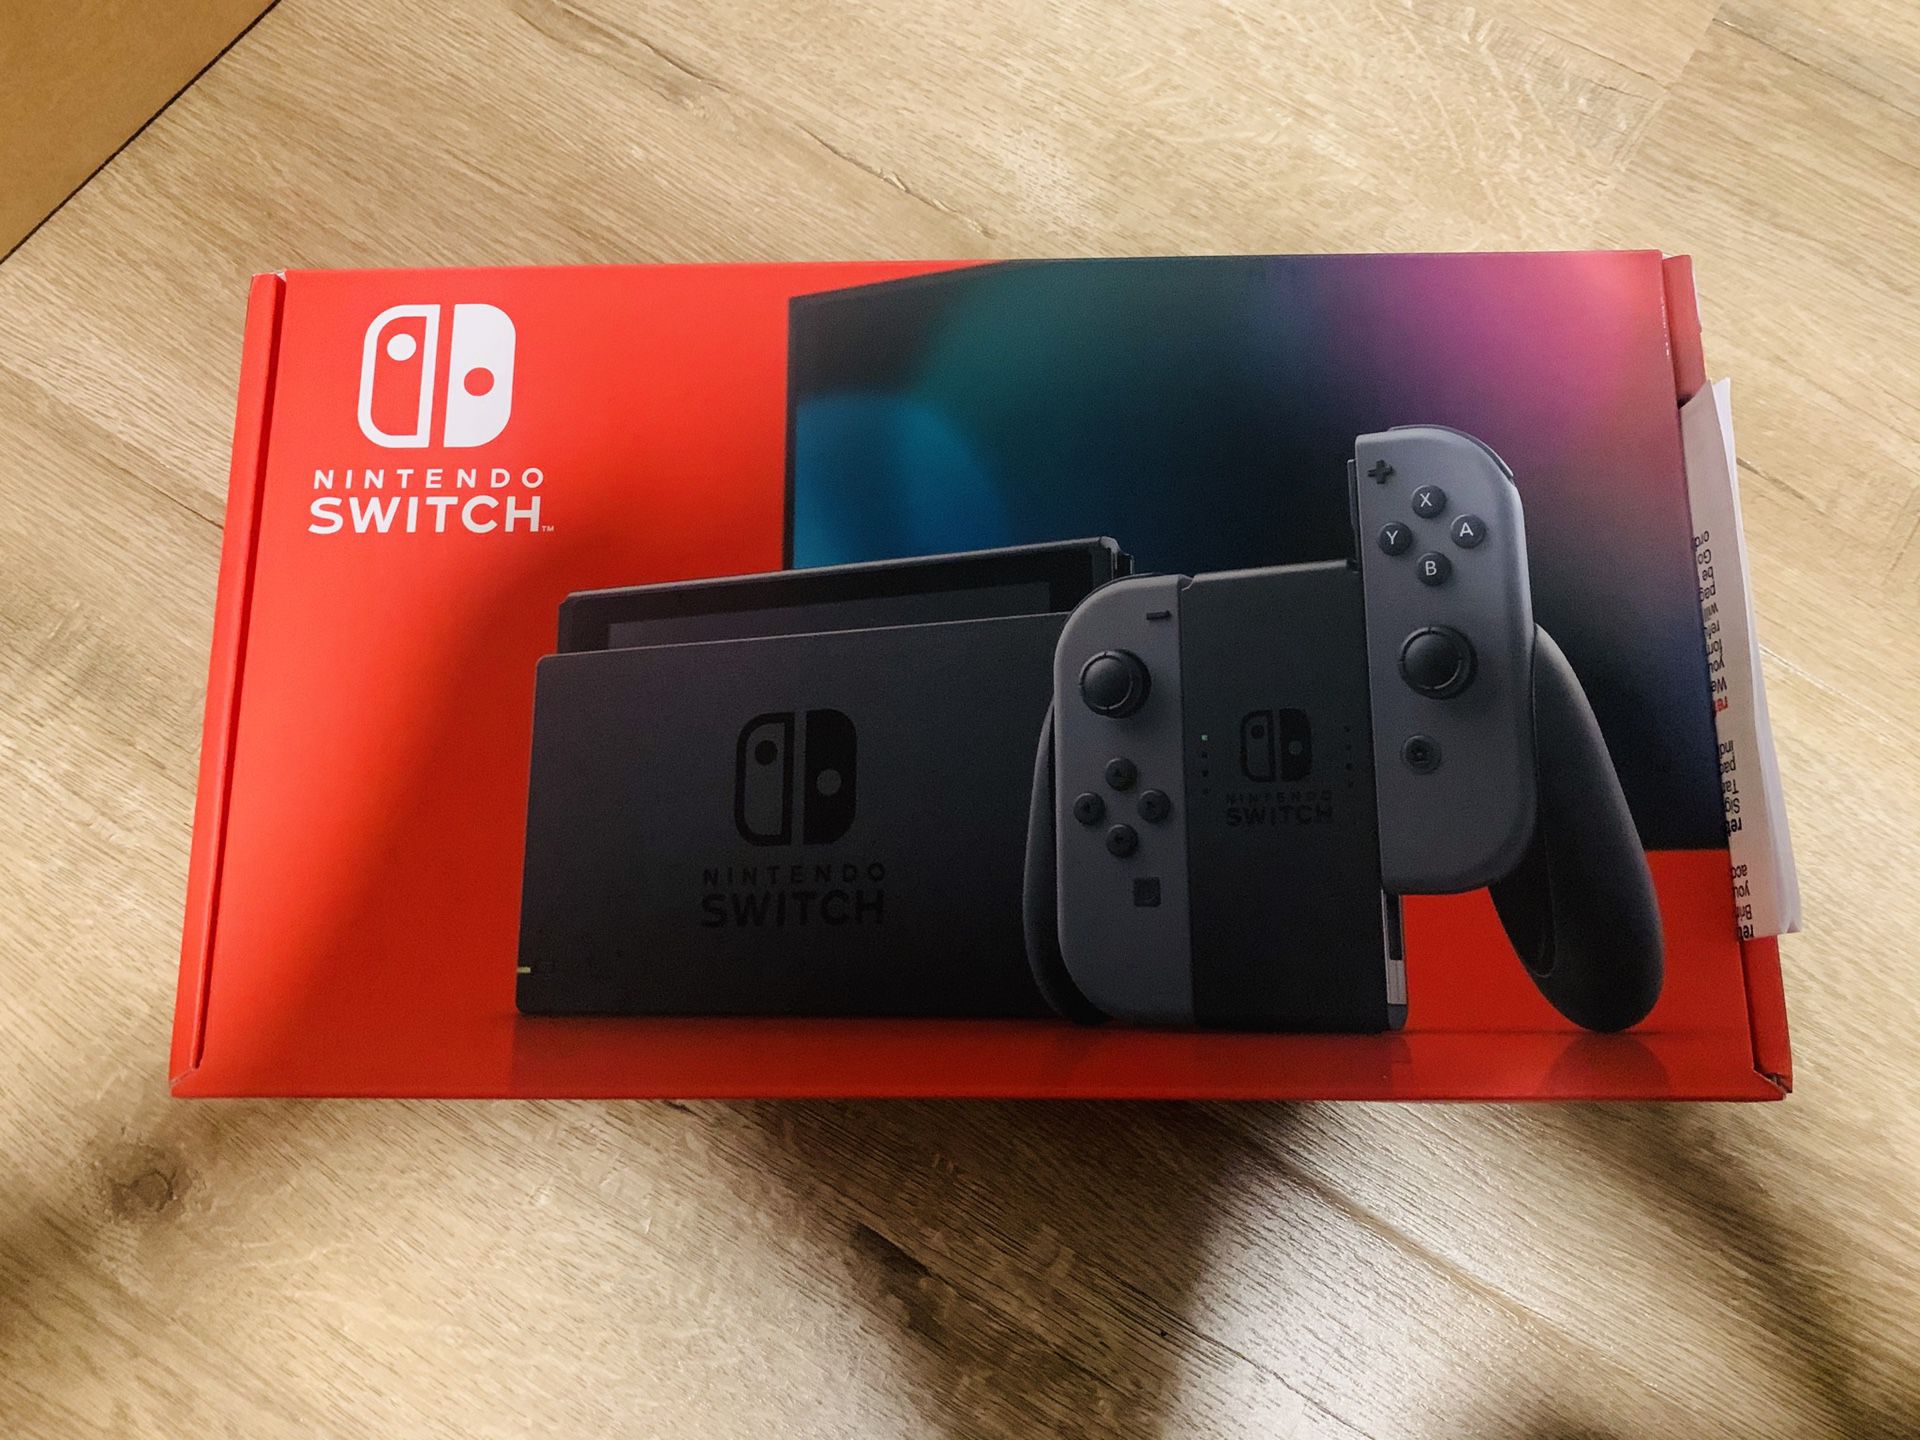 Nintendo Switch V2 Gray - Brand New with Receipt